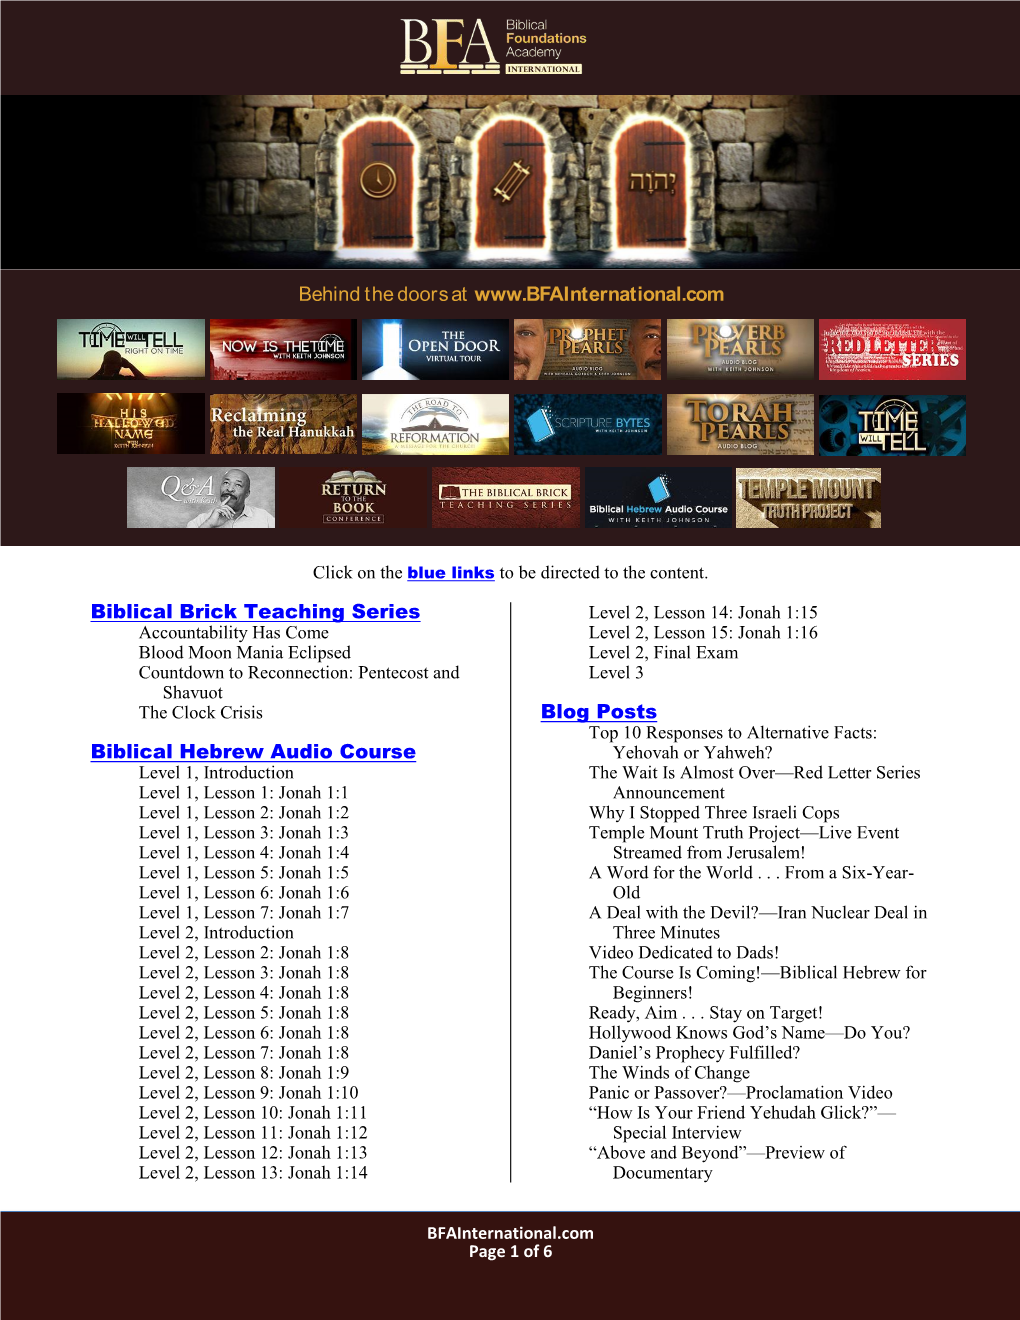 Biblical Brick Teaching Series Biblical Hebrew Audio Course Blog Posts